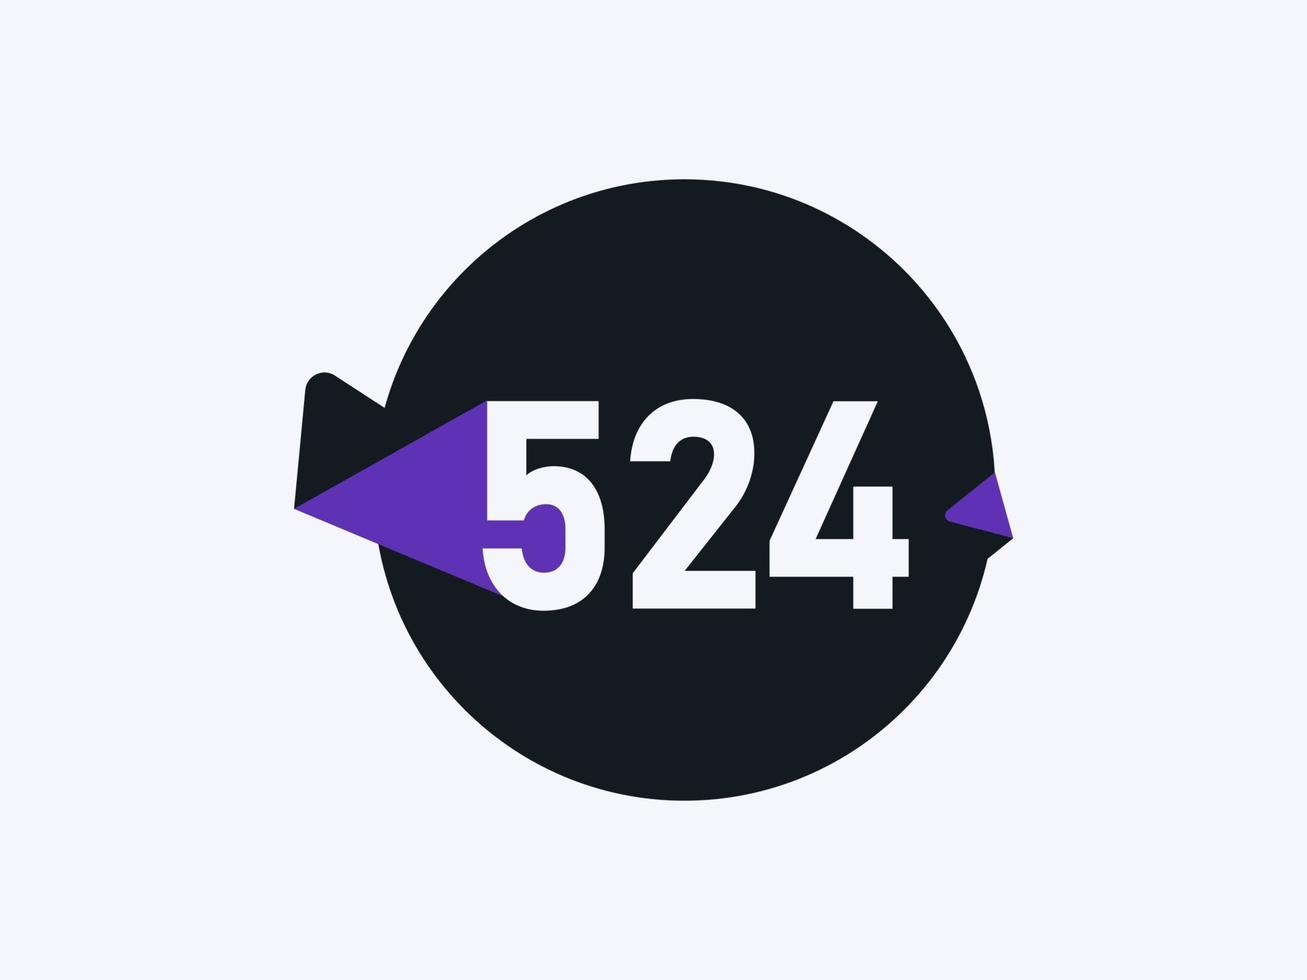 524 Number logo icon design vector image. Number logo icon design vector image